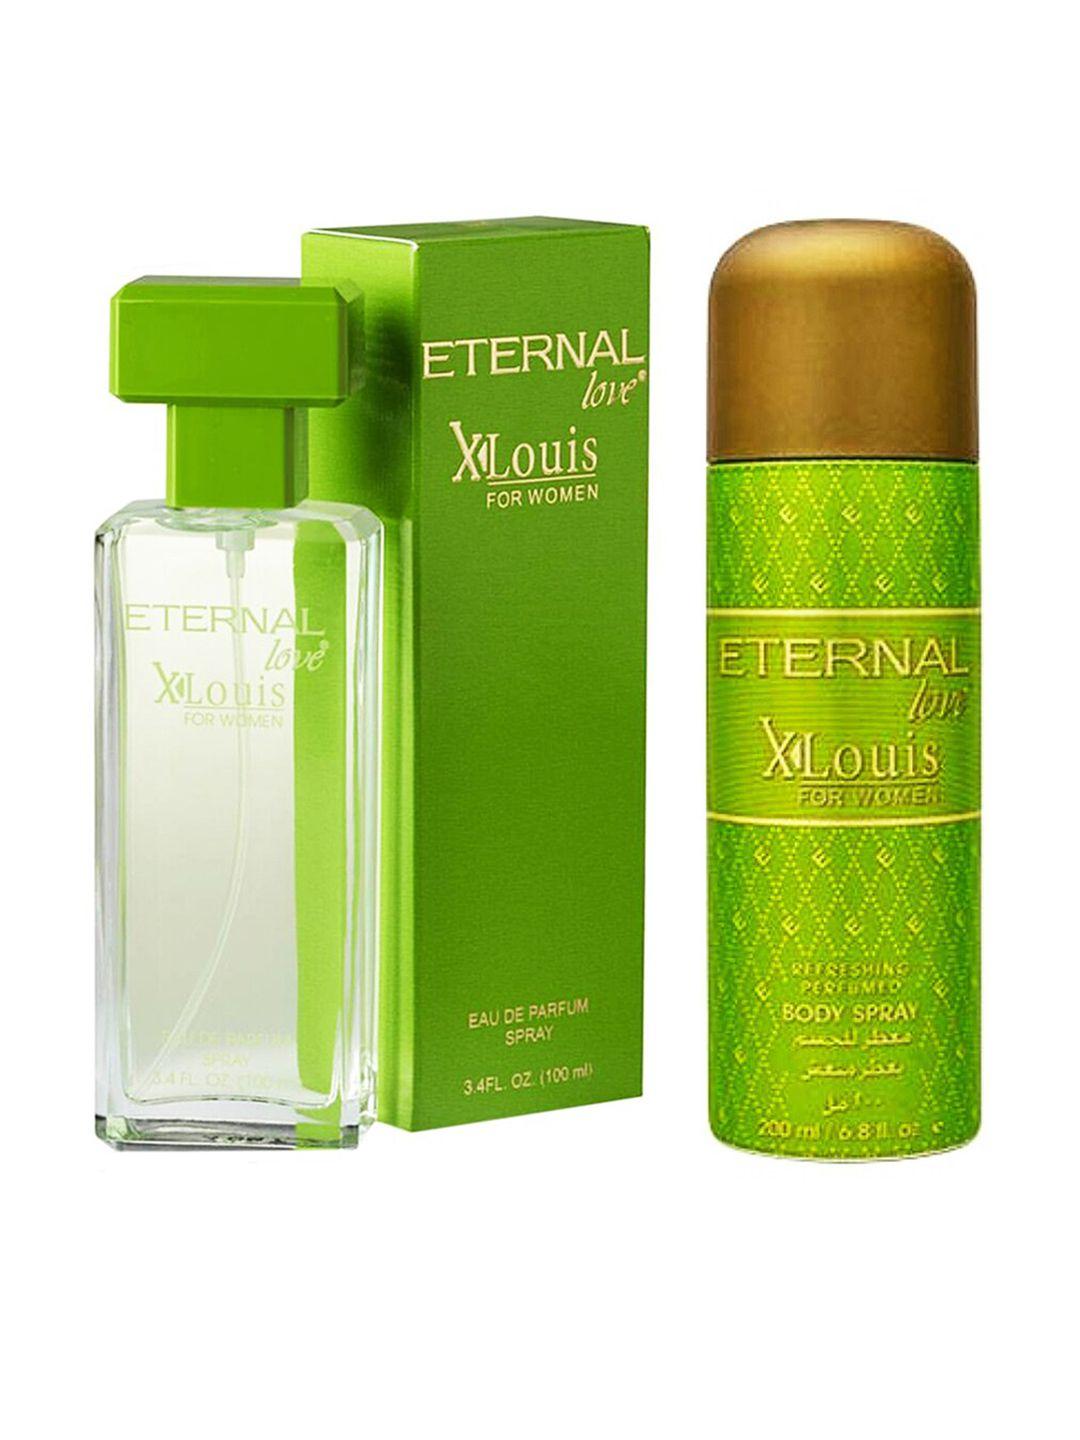 eternal love set of x-louis eau de parfum & body spray